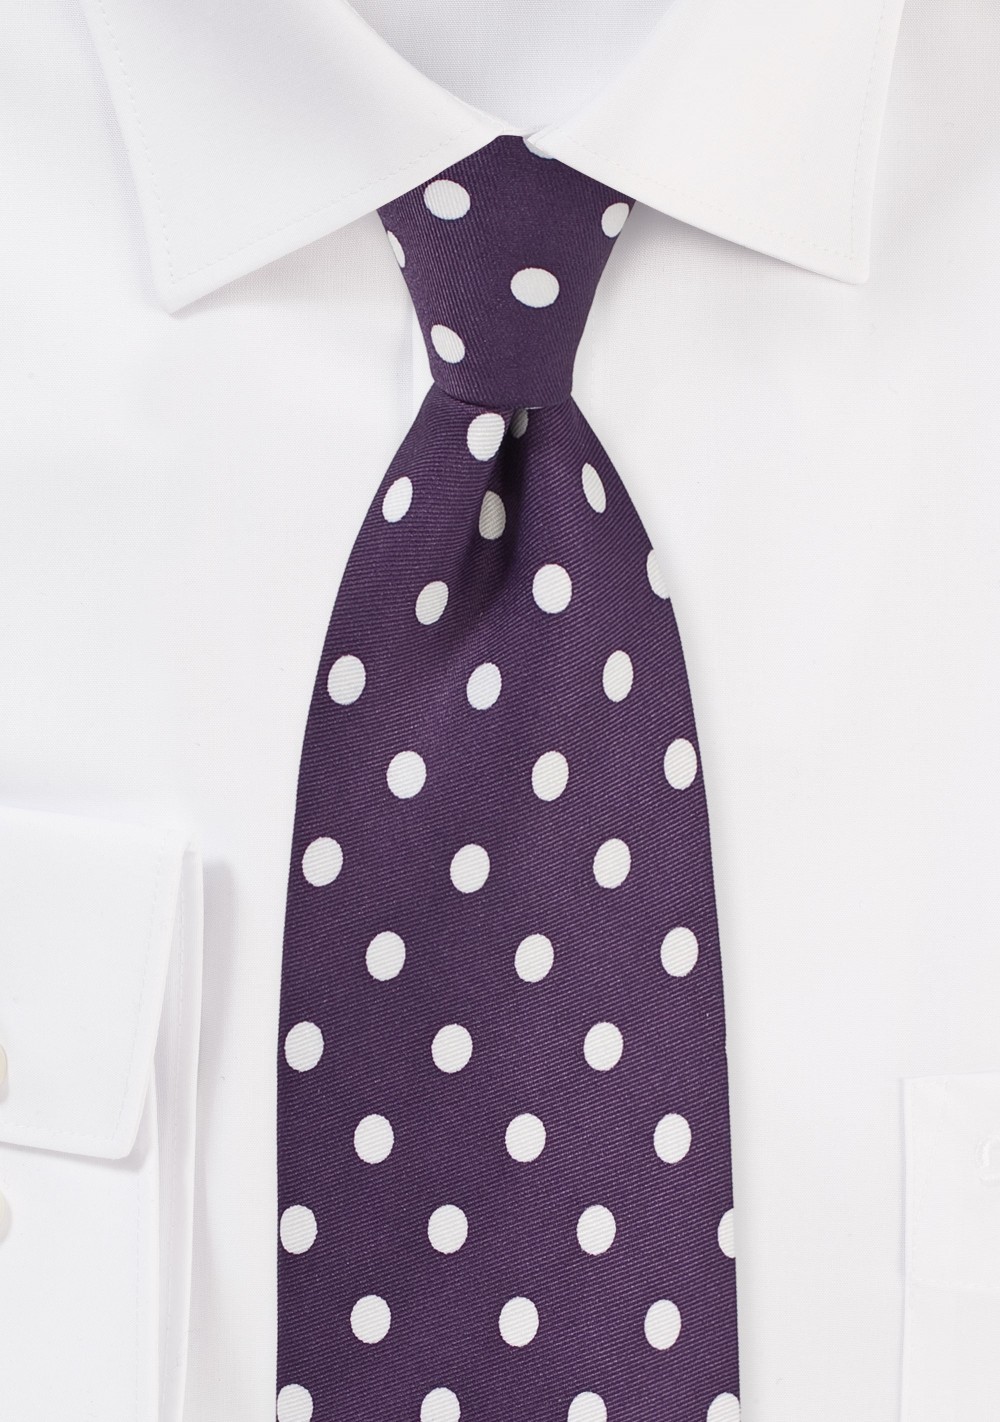 Plum Purple Tie with White Polka Dots